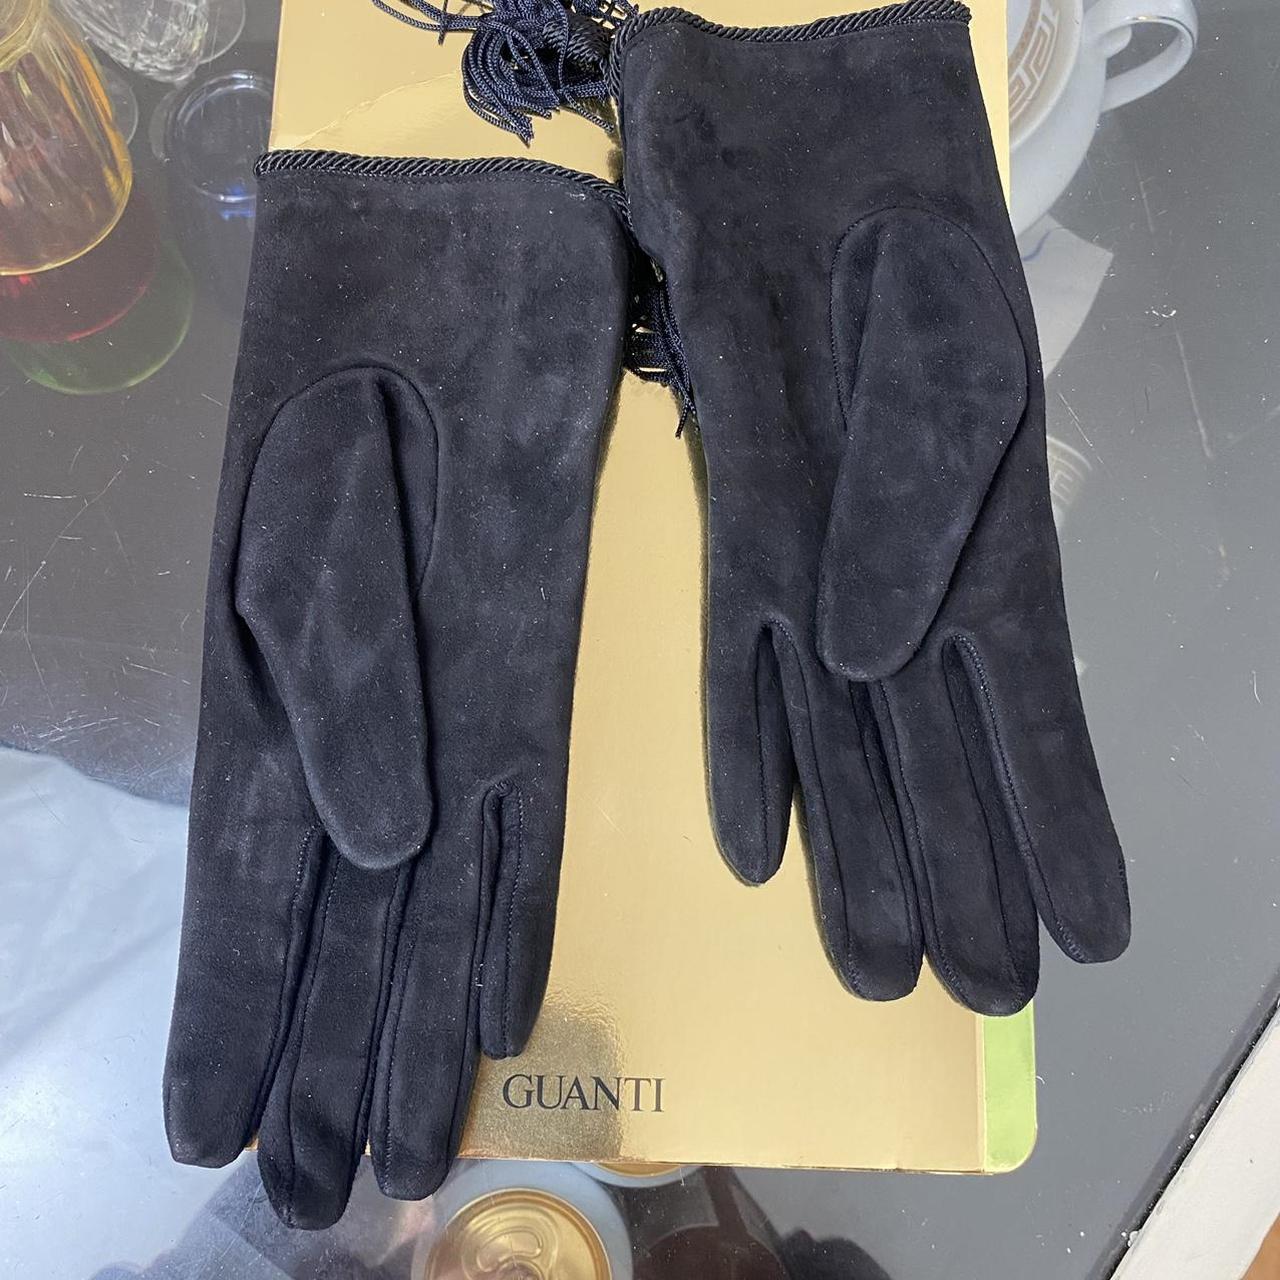 Rare 90’s Moschino gold cross suede tasseled gloves,... - Depop